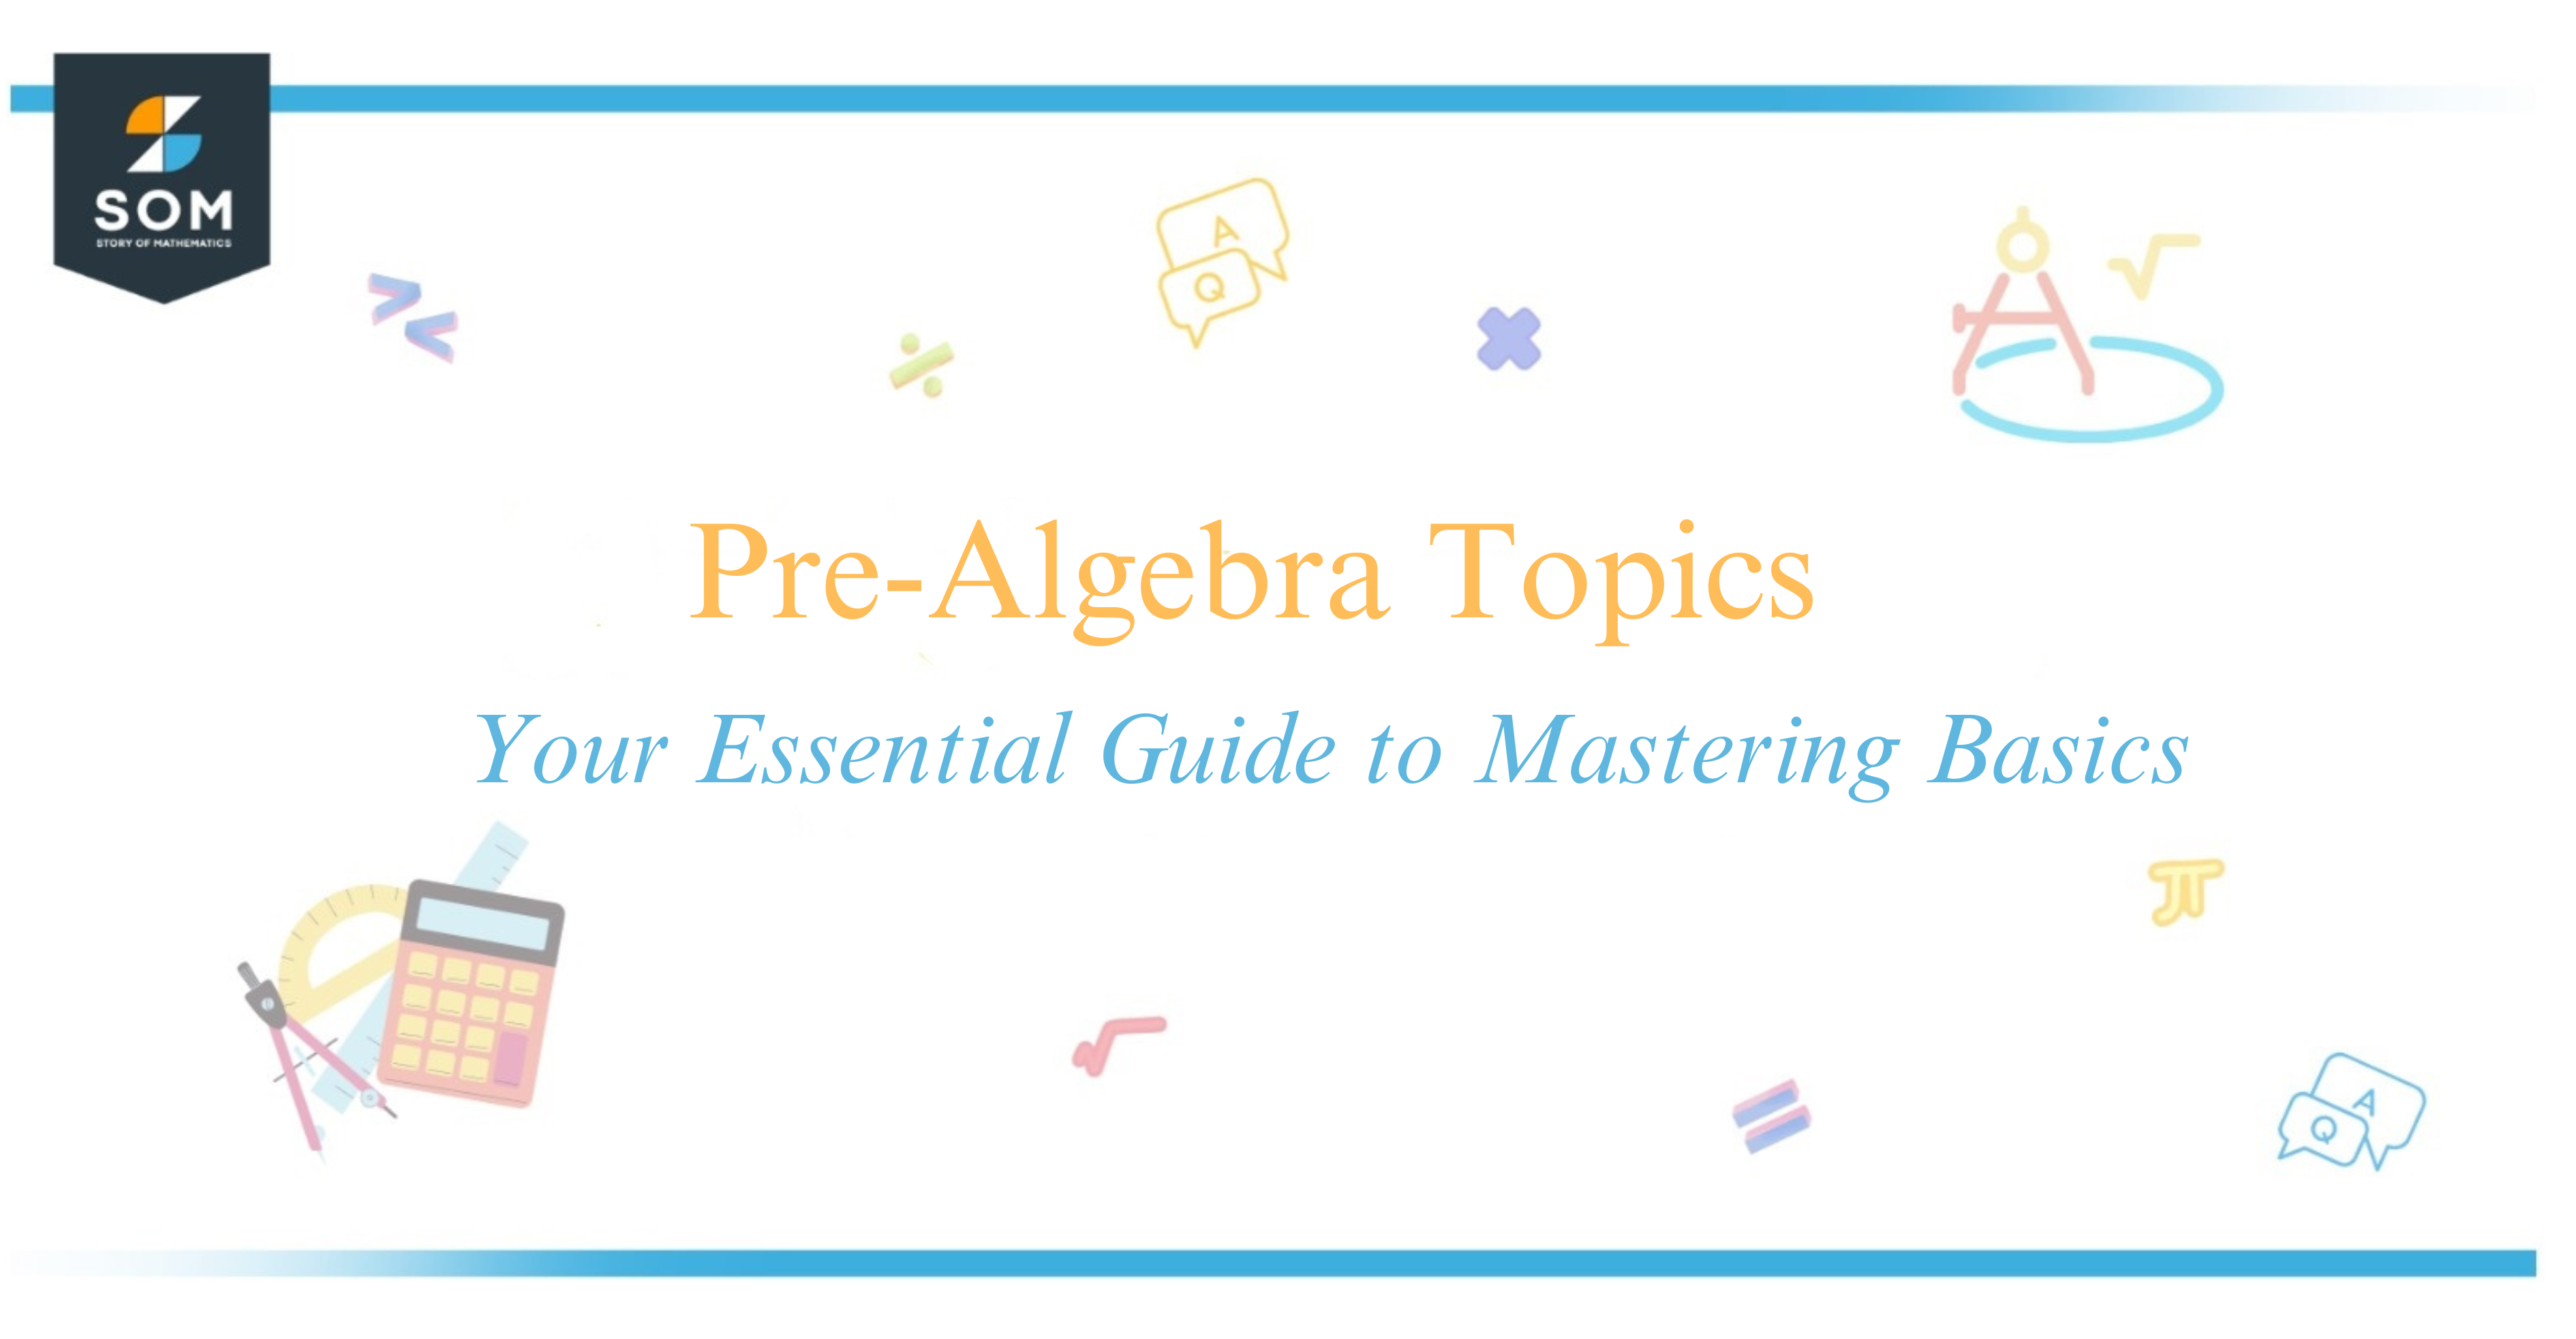 Pre-Algebra Topics Your Essential Guide to Mastering Basics